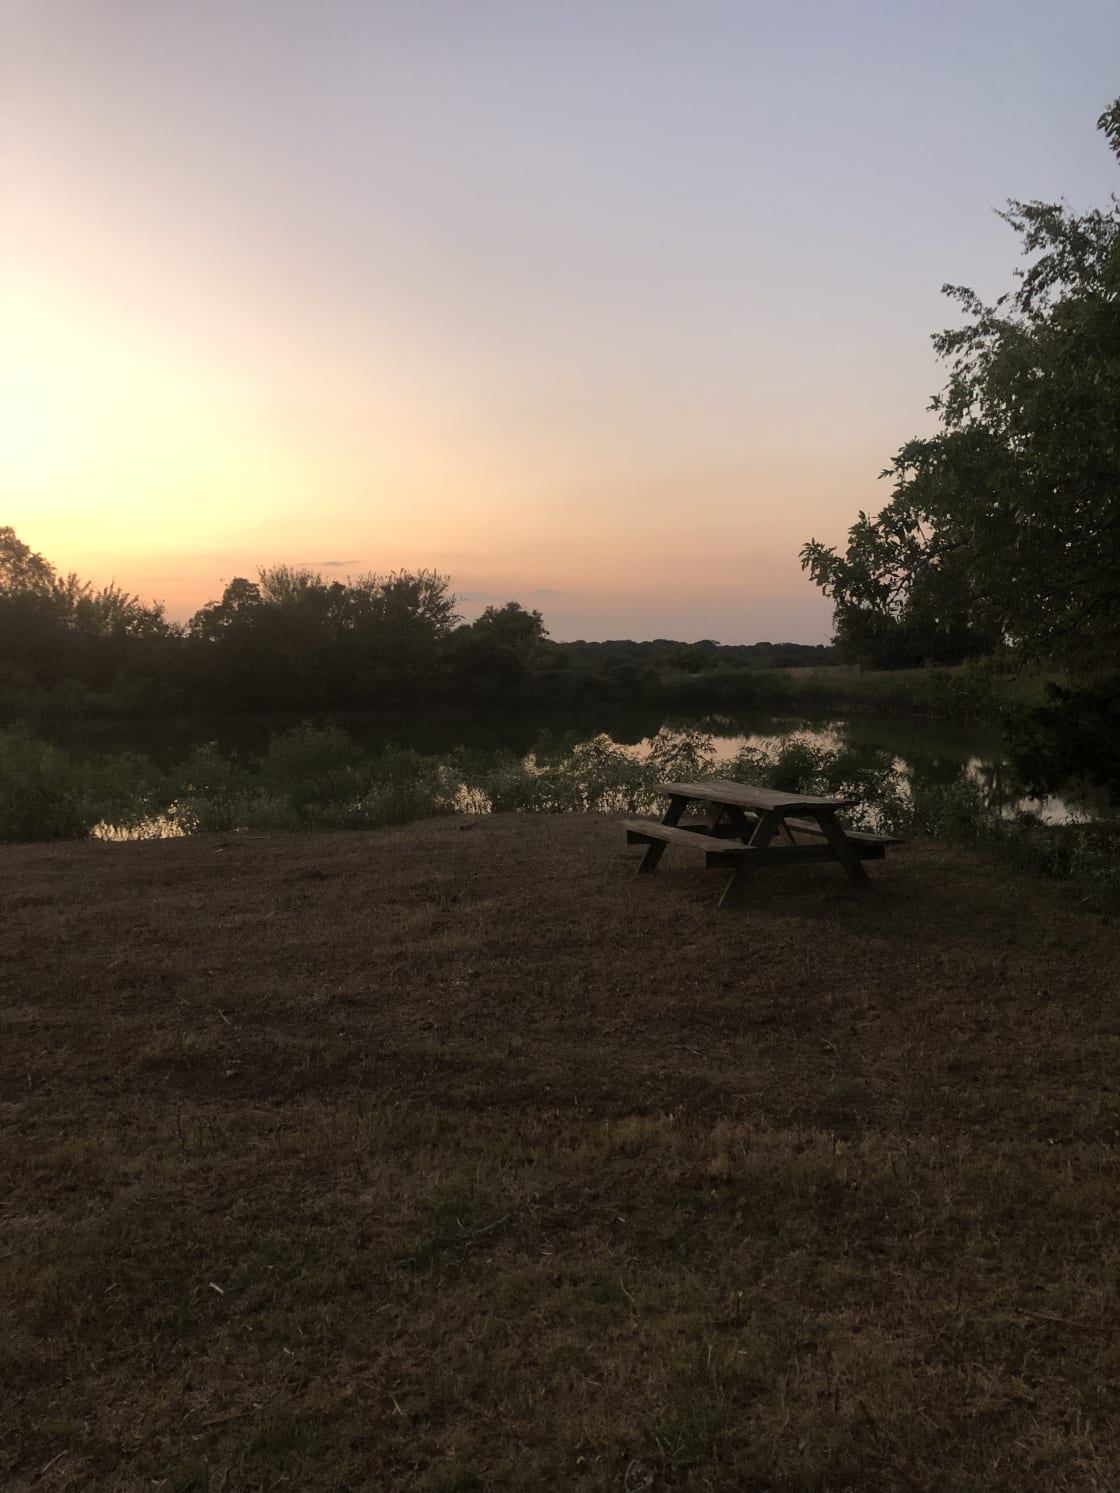 Sunset at Eddy's Pond